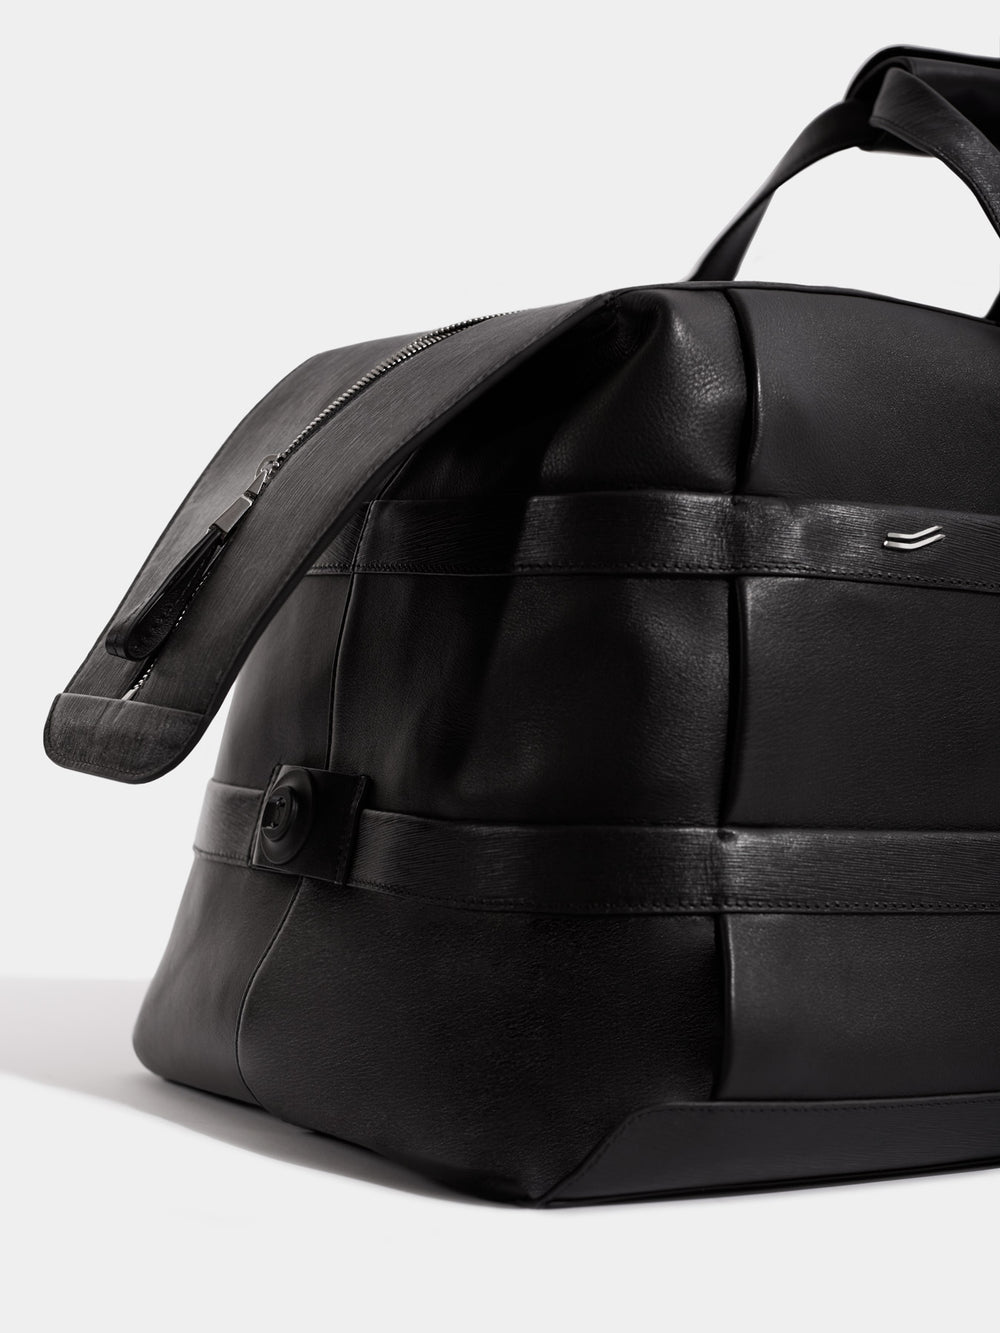 vantage black leather weekender bag details zipper